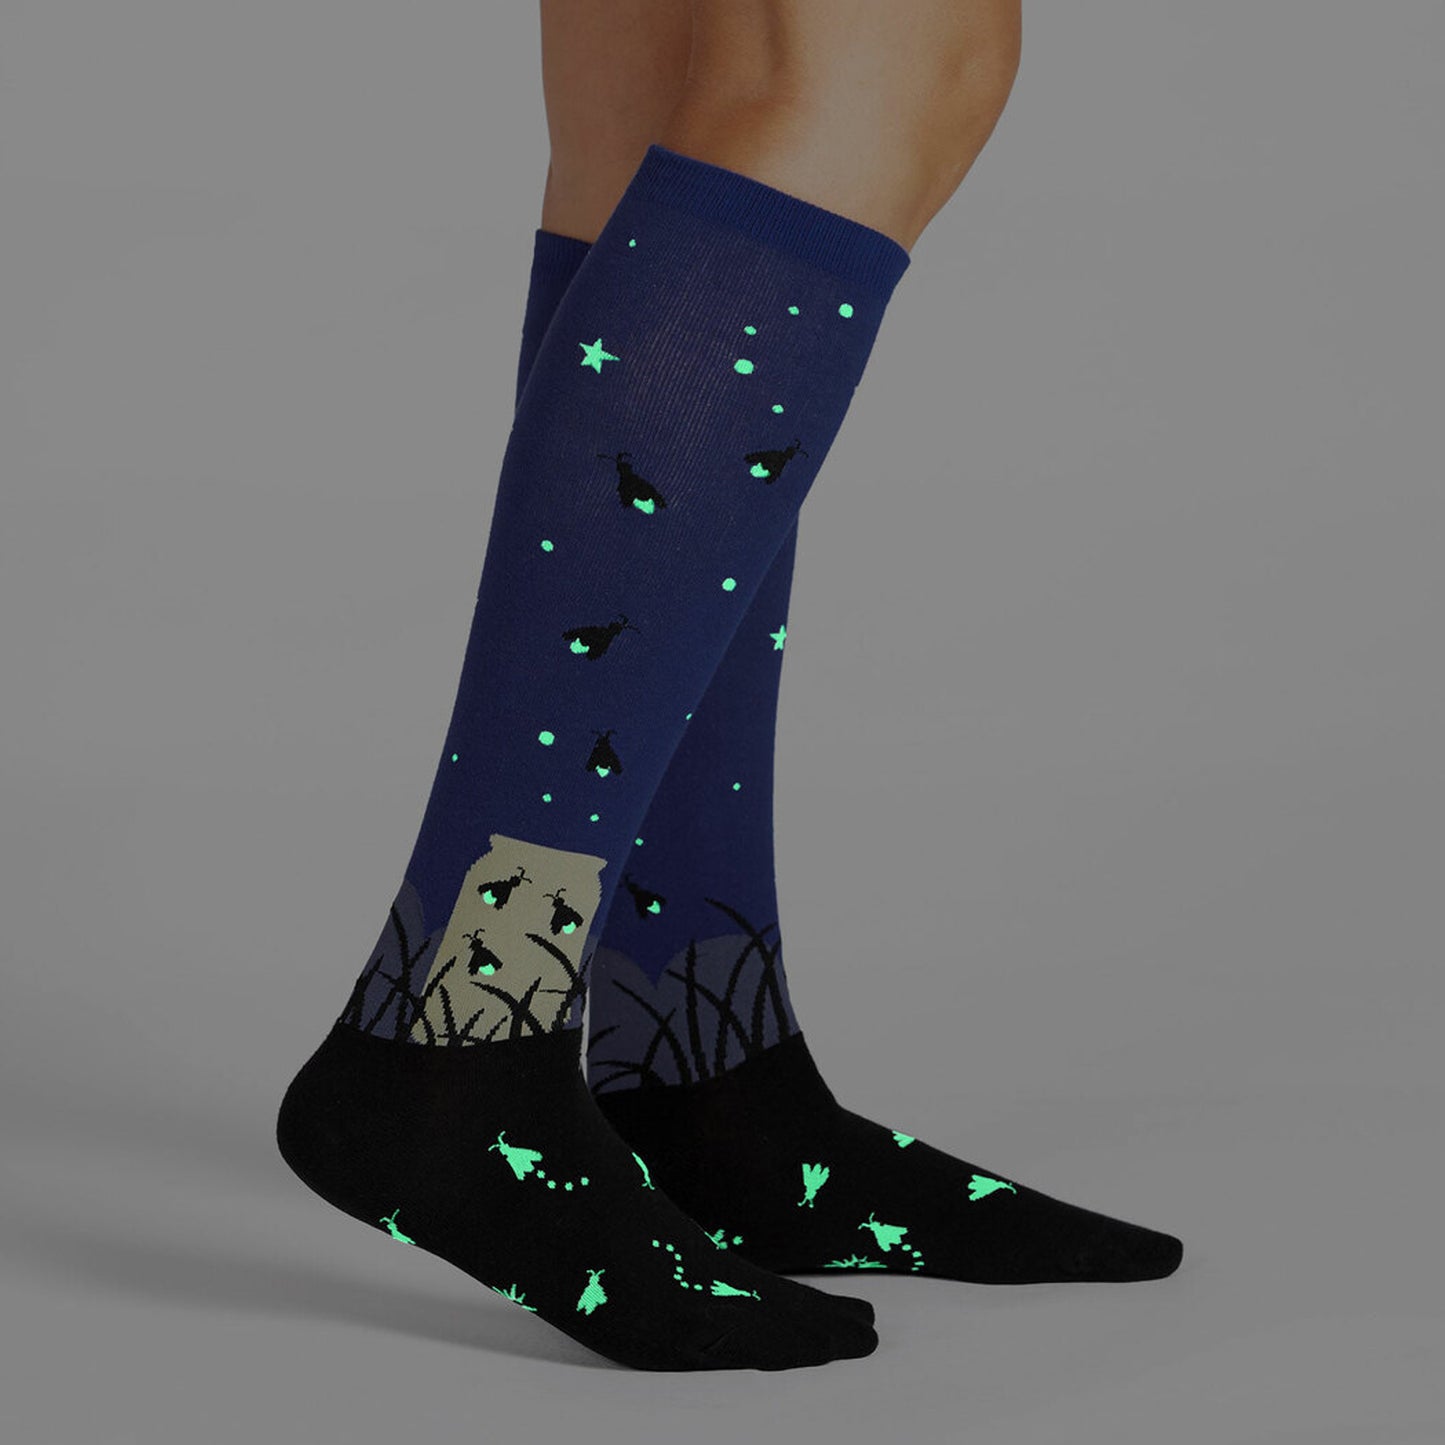 Sock It To Me Women's Knee High Socks - Nightlight (Glow in the Dark)